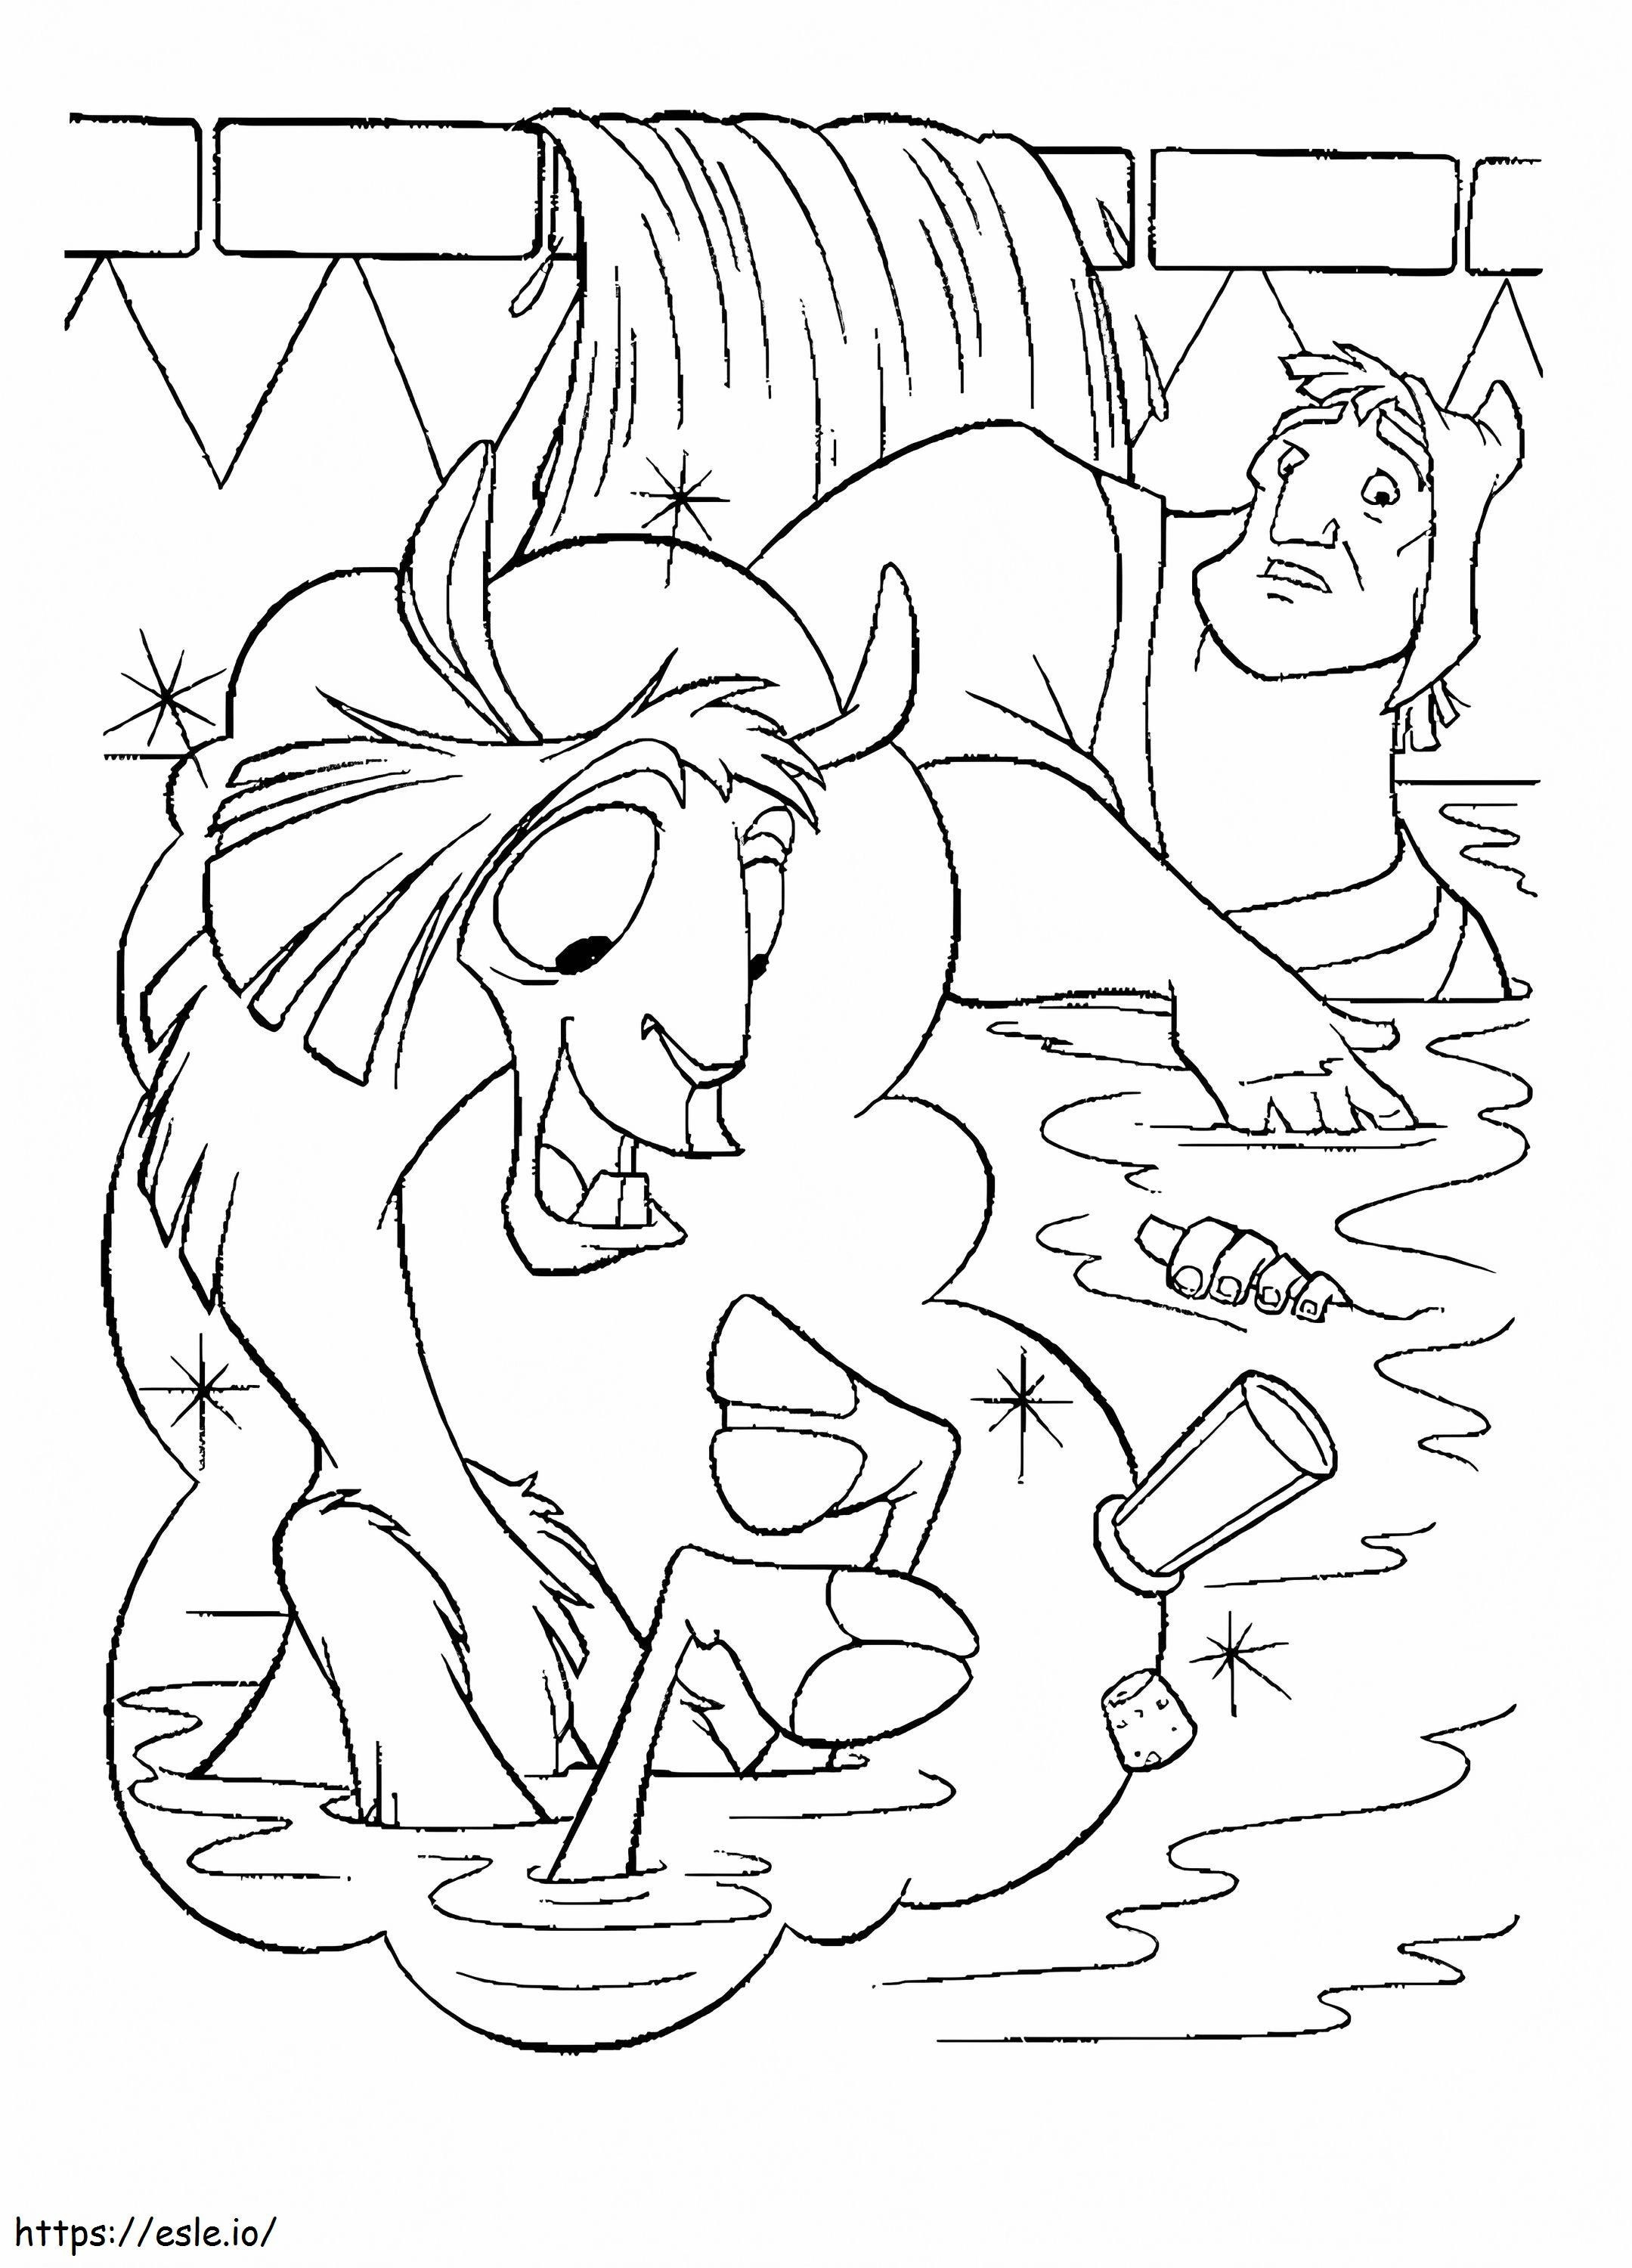 Kuzco And Pacha coloring page